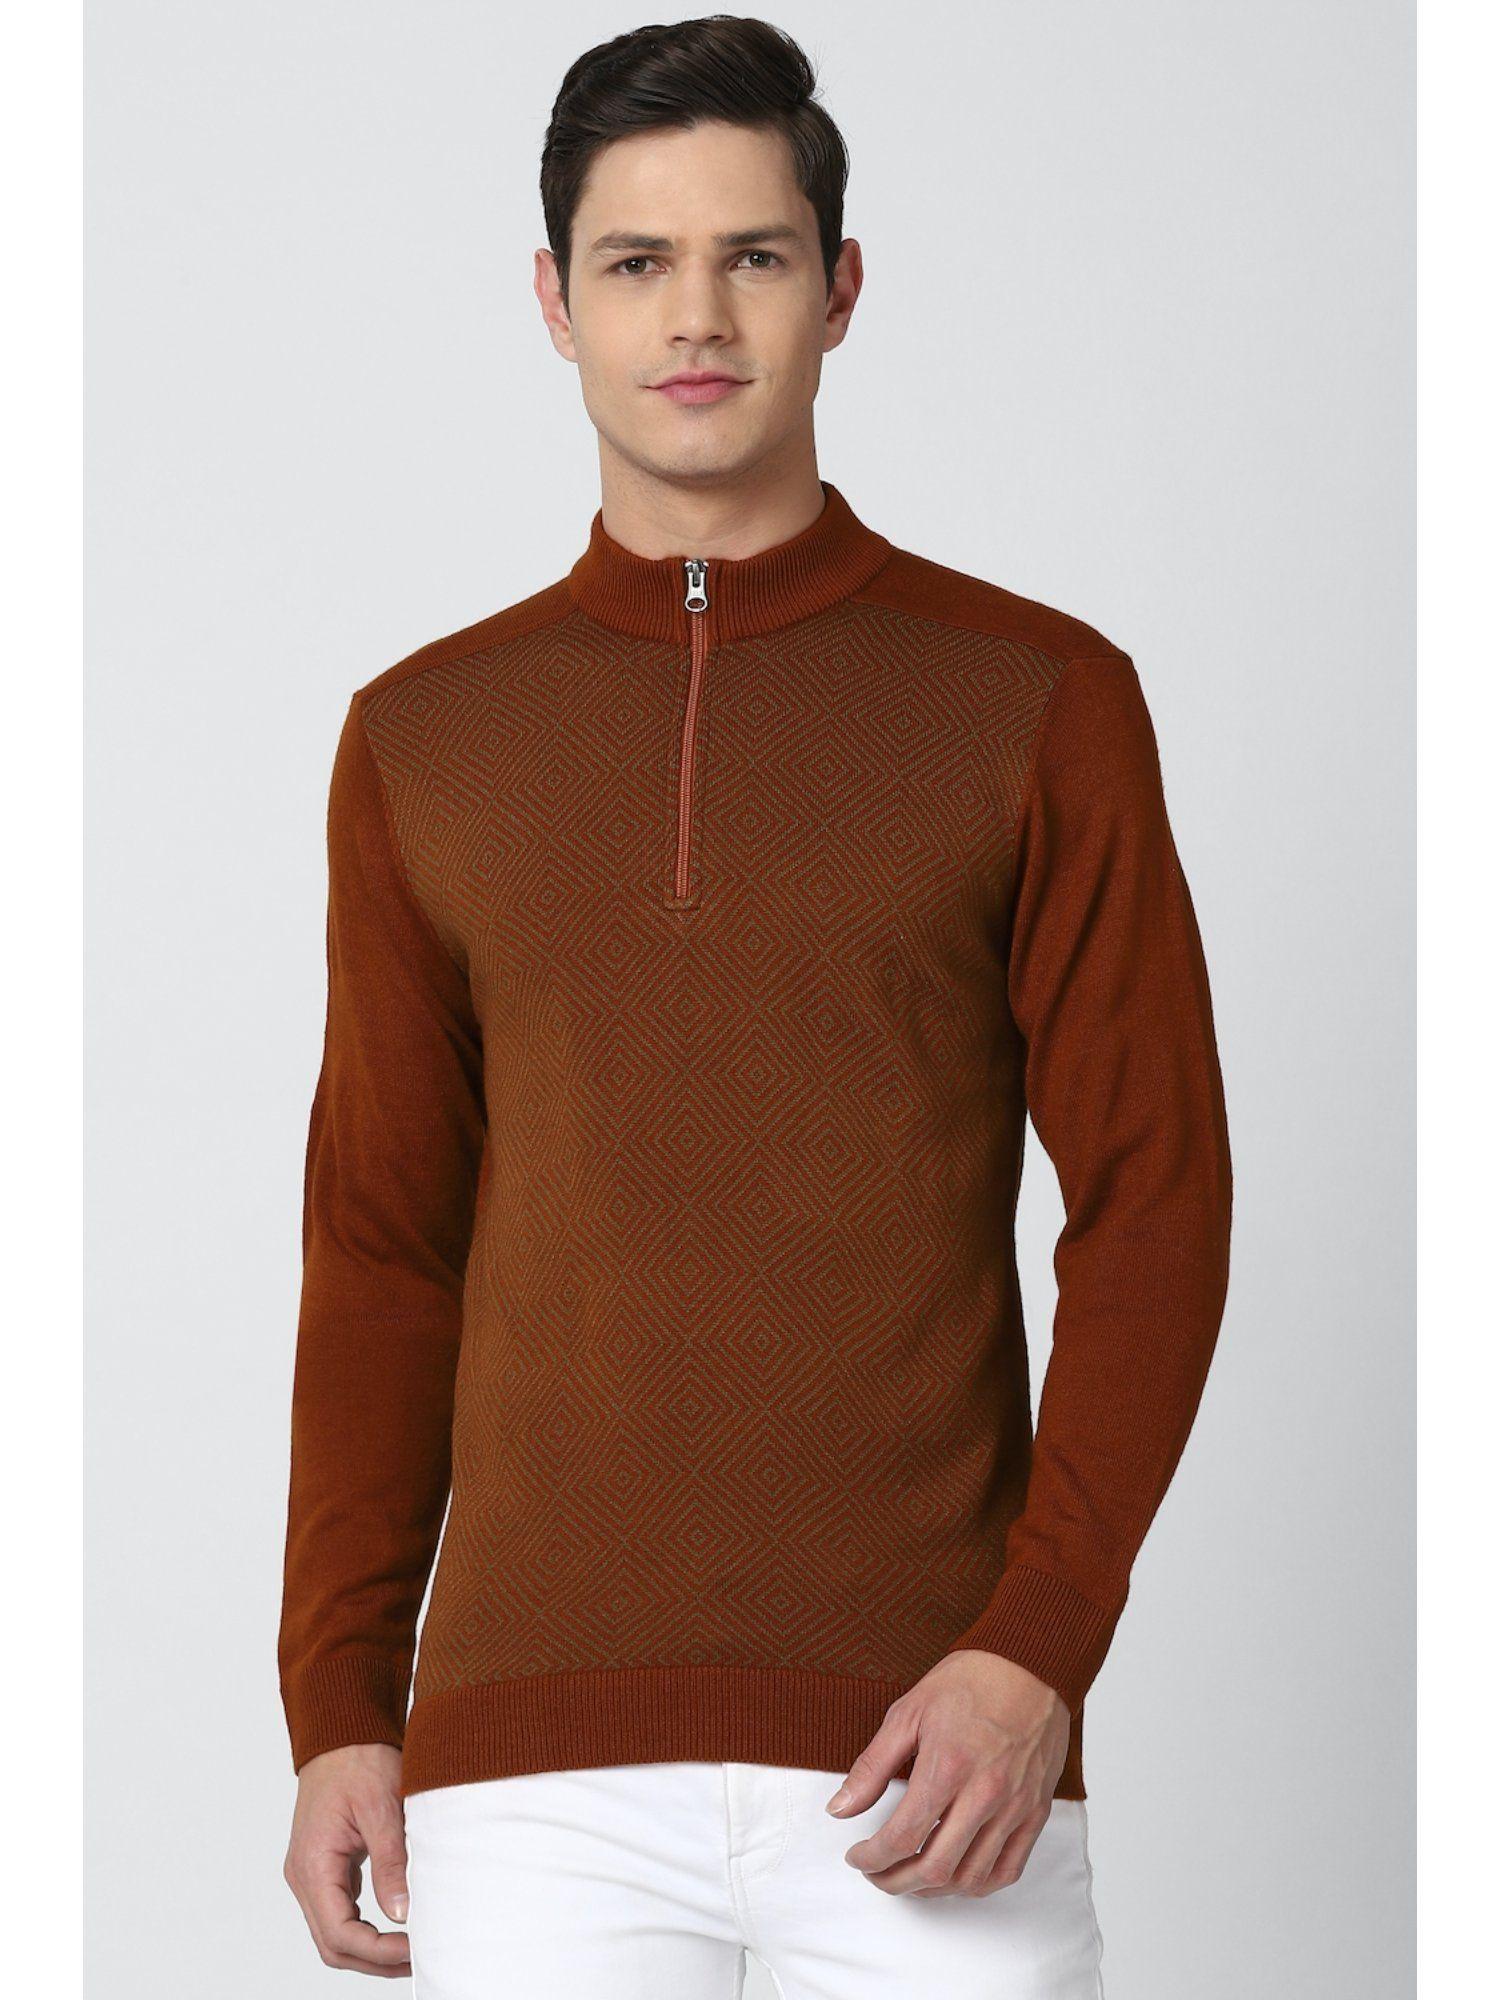 men-brown-patterned-stylized-neck-sweater